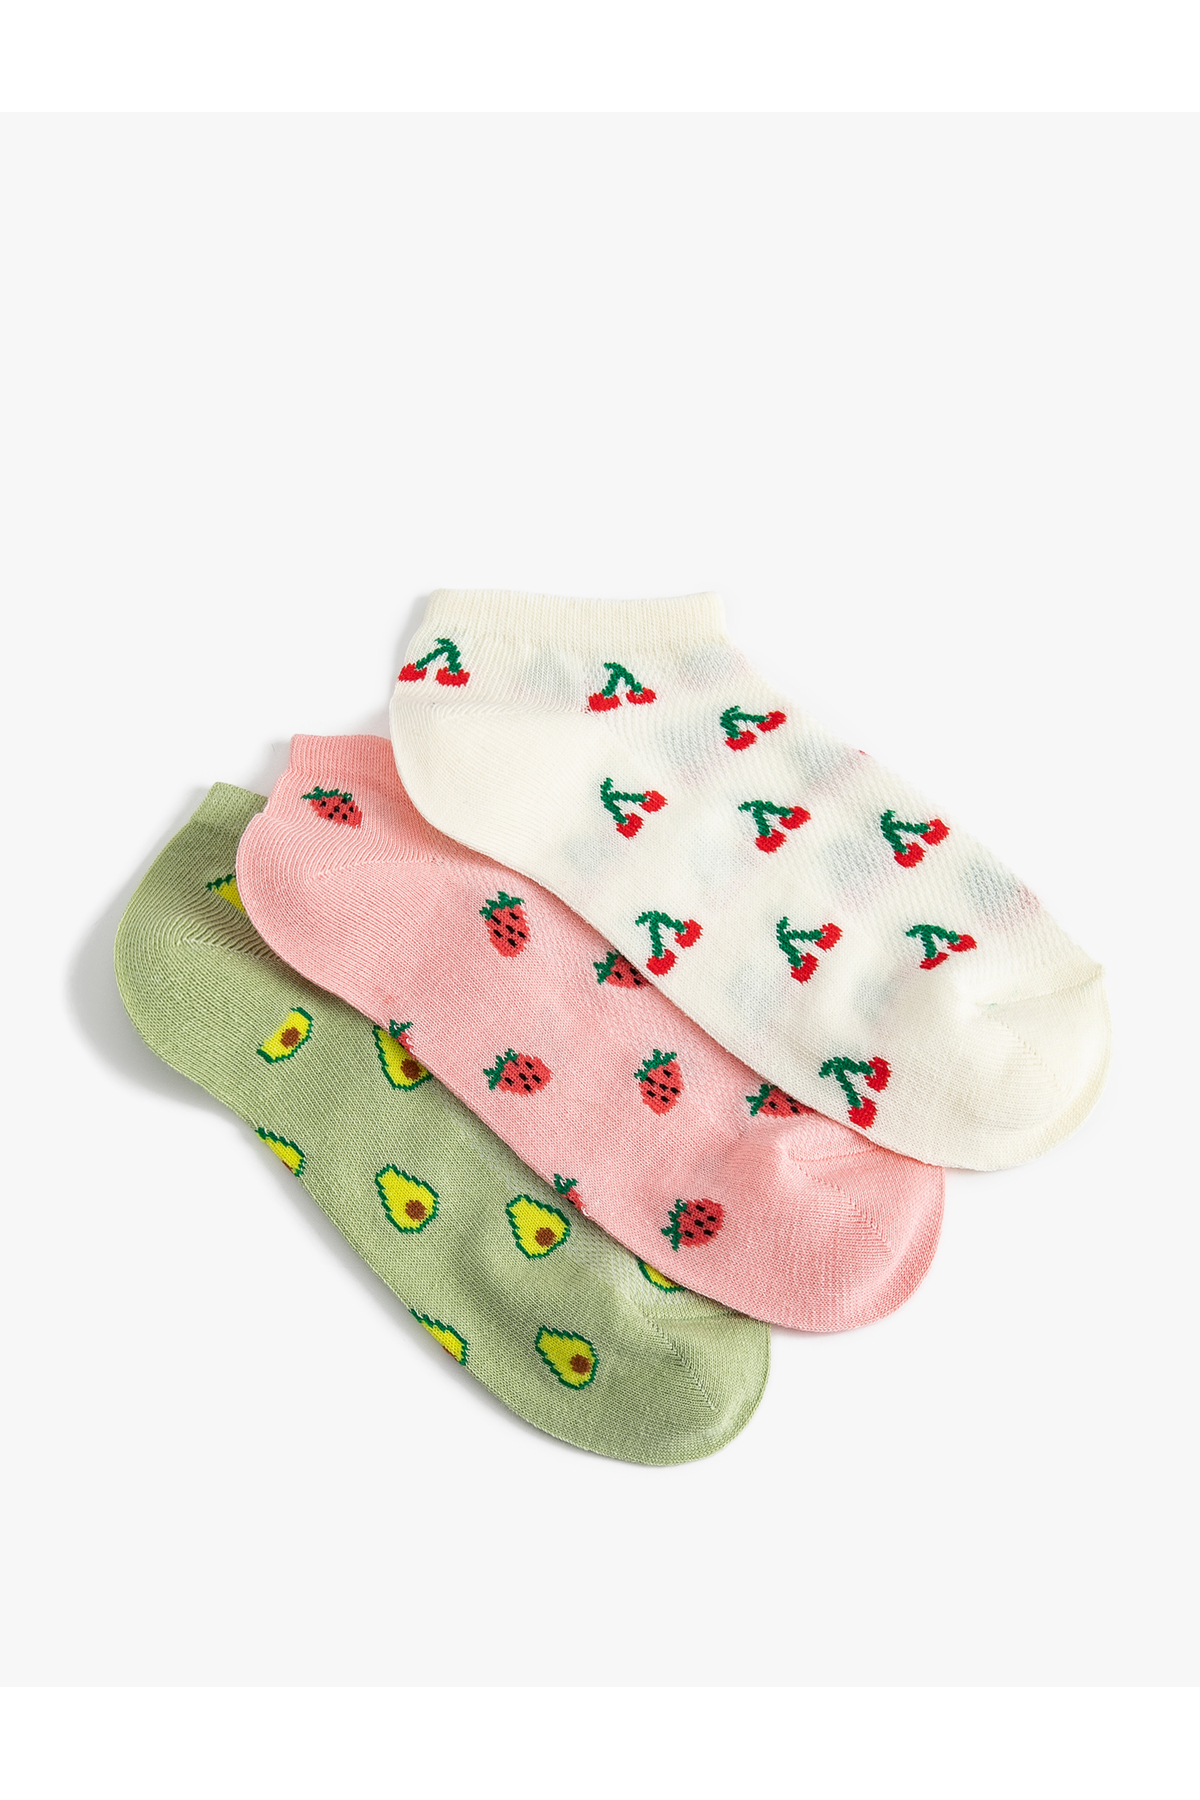 Koton 3-Piece Booties Socks Set Fruit Patterned